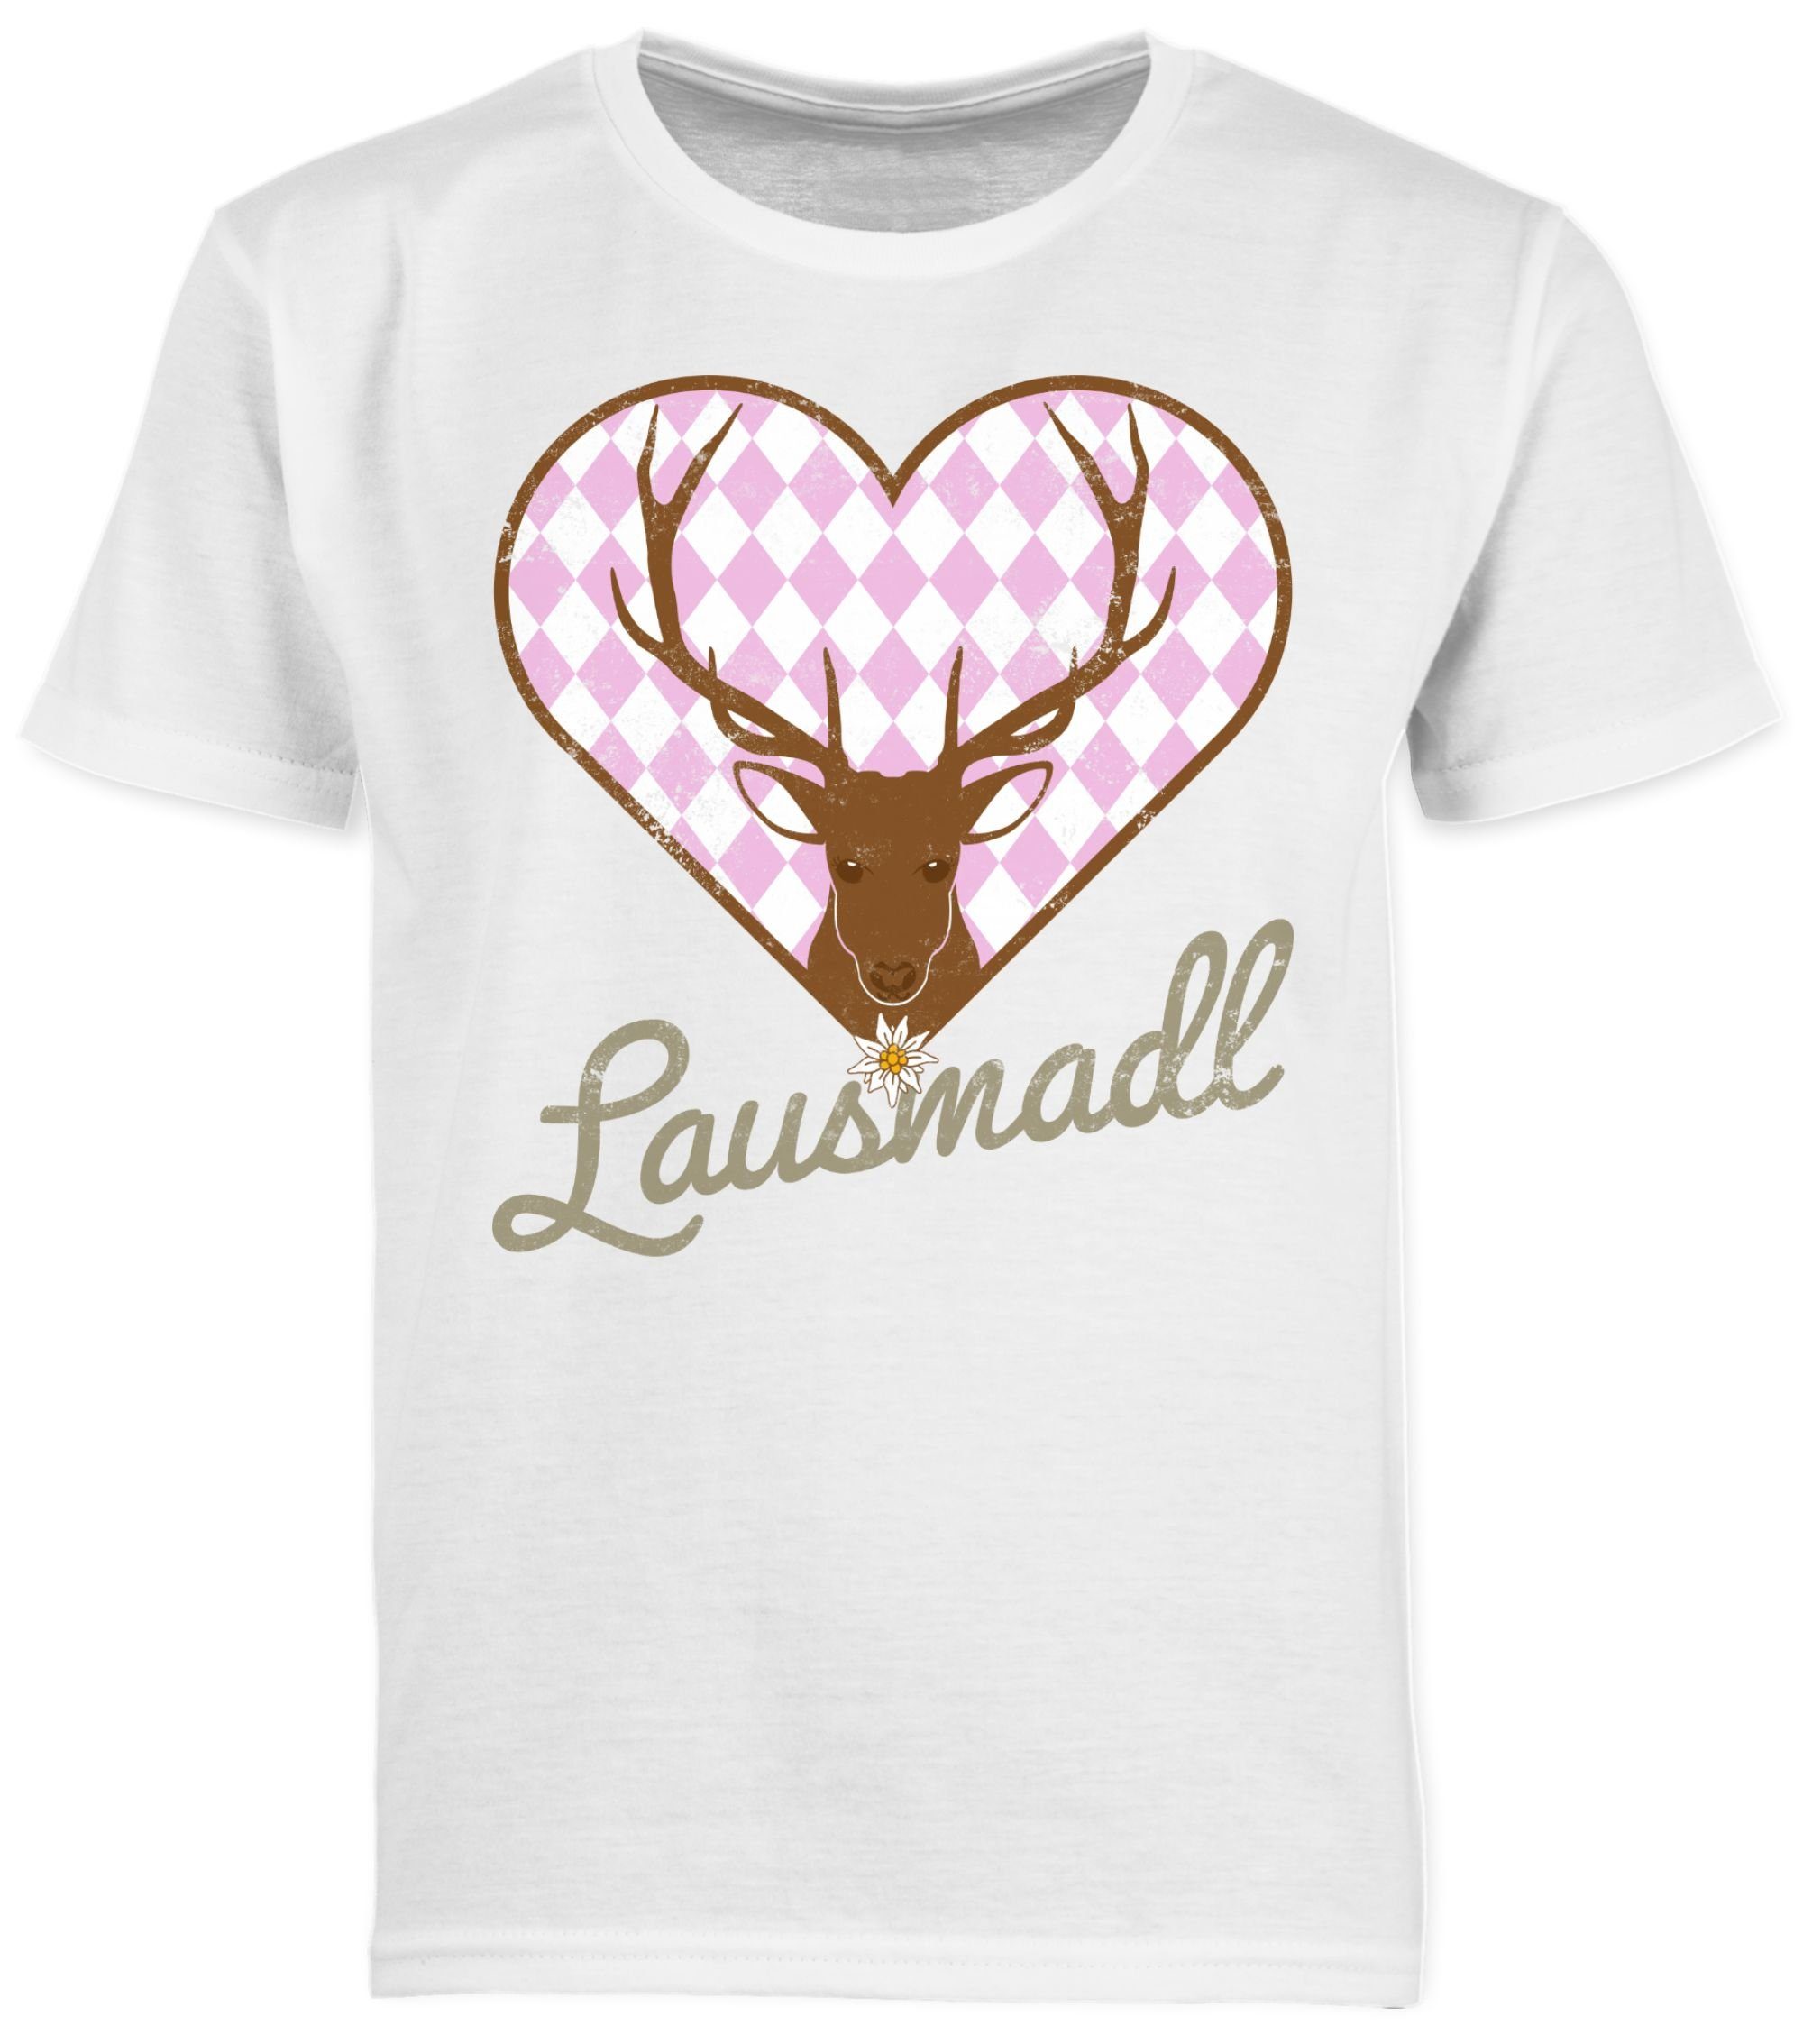 Shirtracer T-Shirt Lausmadl Weiß Oktoberfest 2 Outfit für Mode Kinder Hirsch